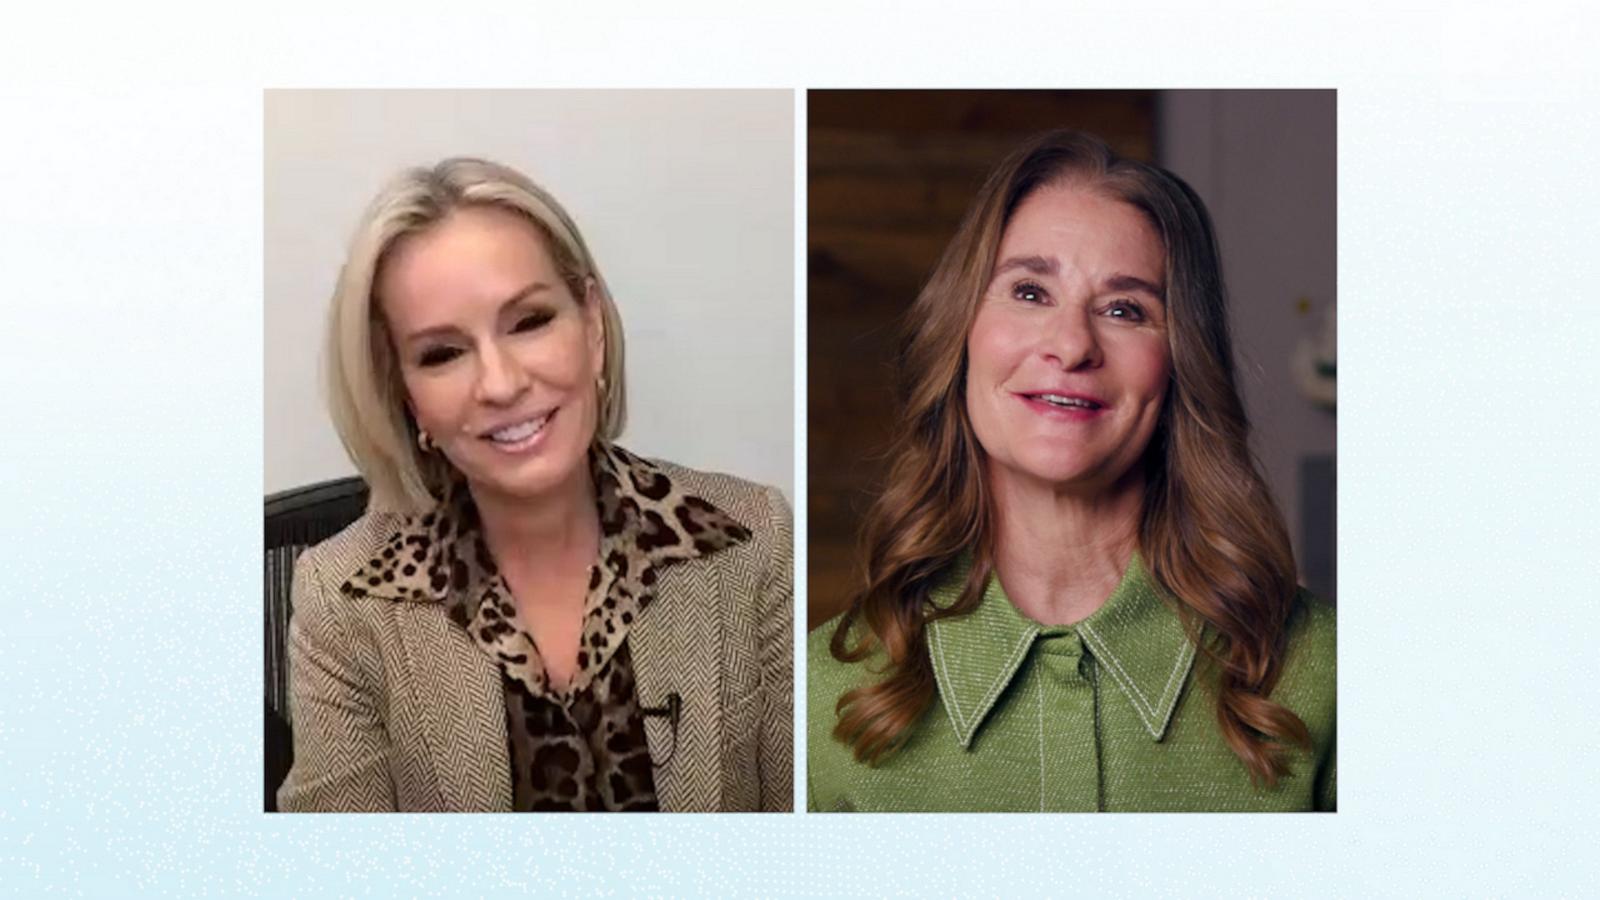 VIDEO: Melinda French Gates speaks with Dr. Ashton on the future of women’s health